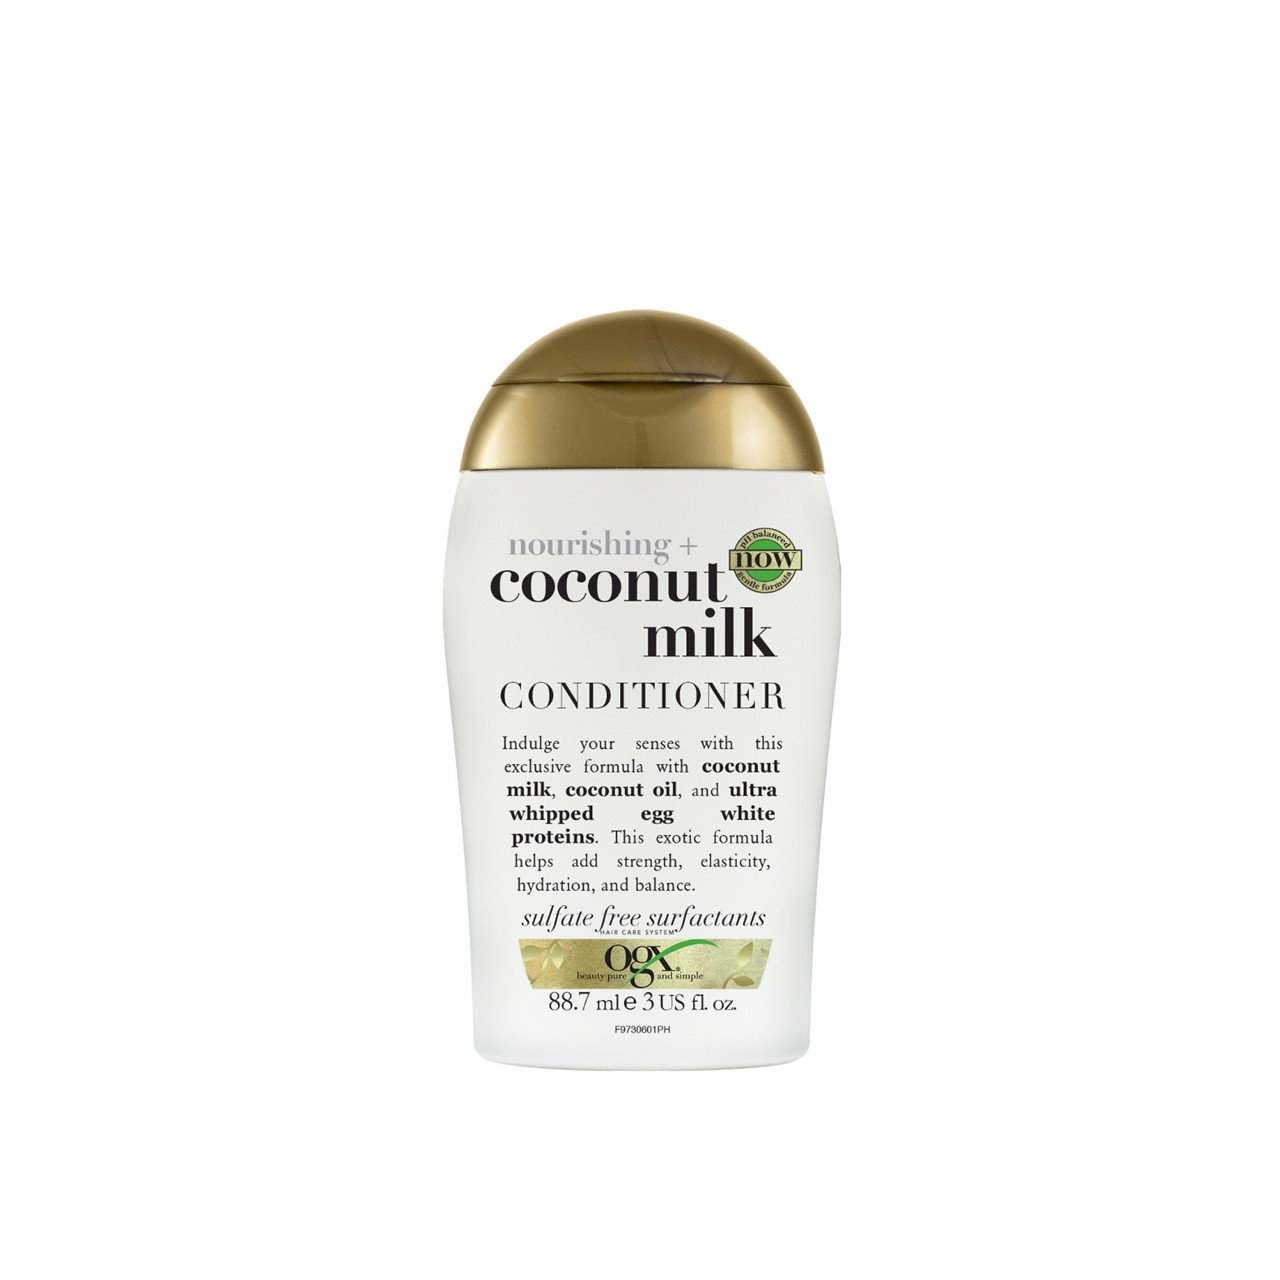 OGX Nourishing + Coconut Milk Conditioner 88.7ml (3 fl oz)